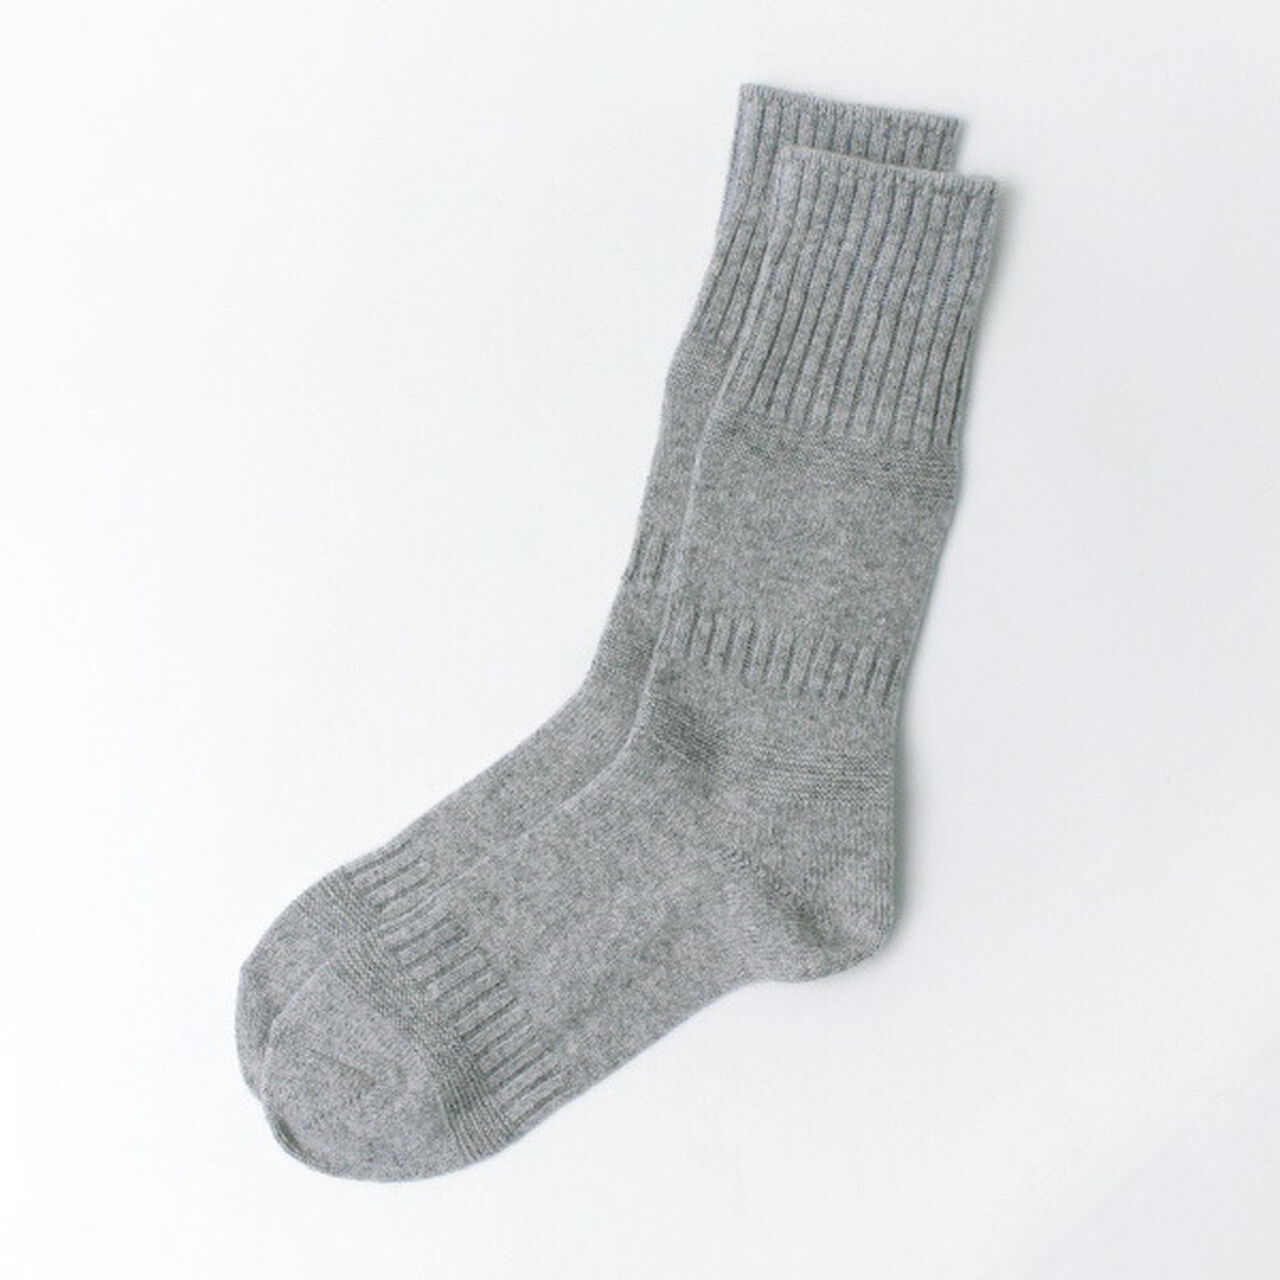 R1378 Gandy pattern crew socks,Grey, large image number 0